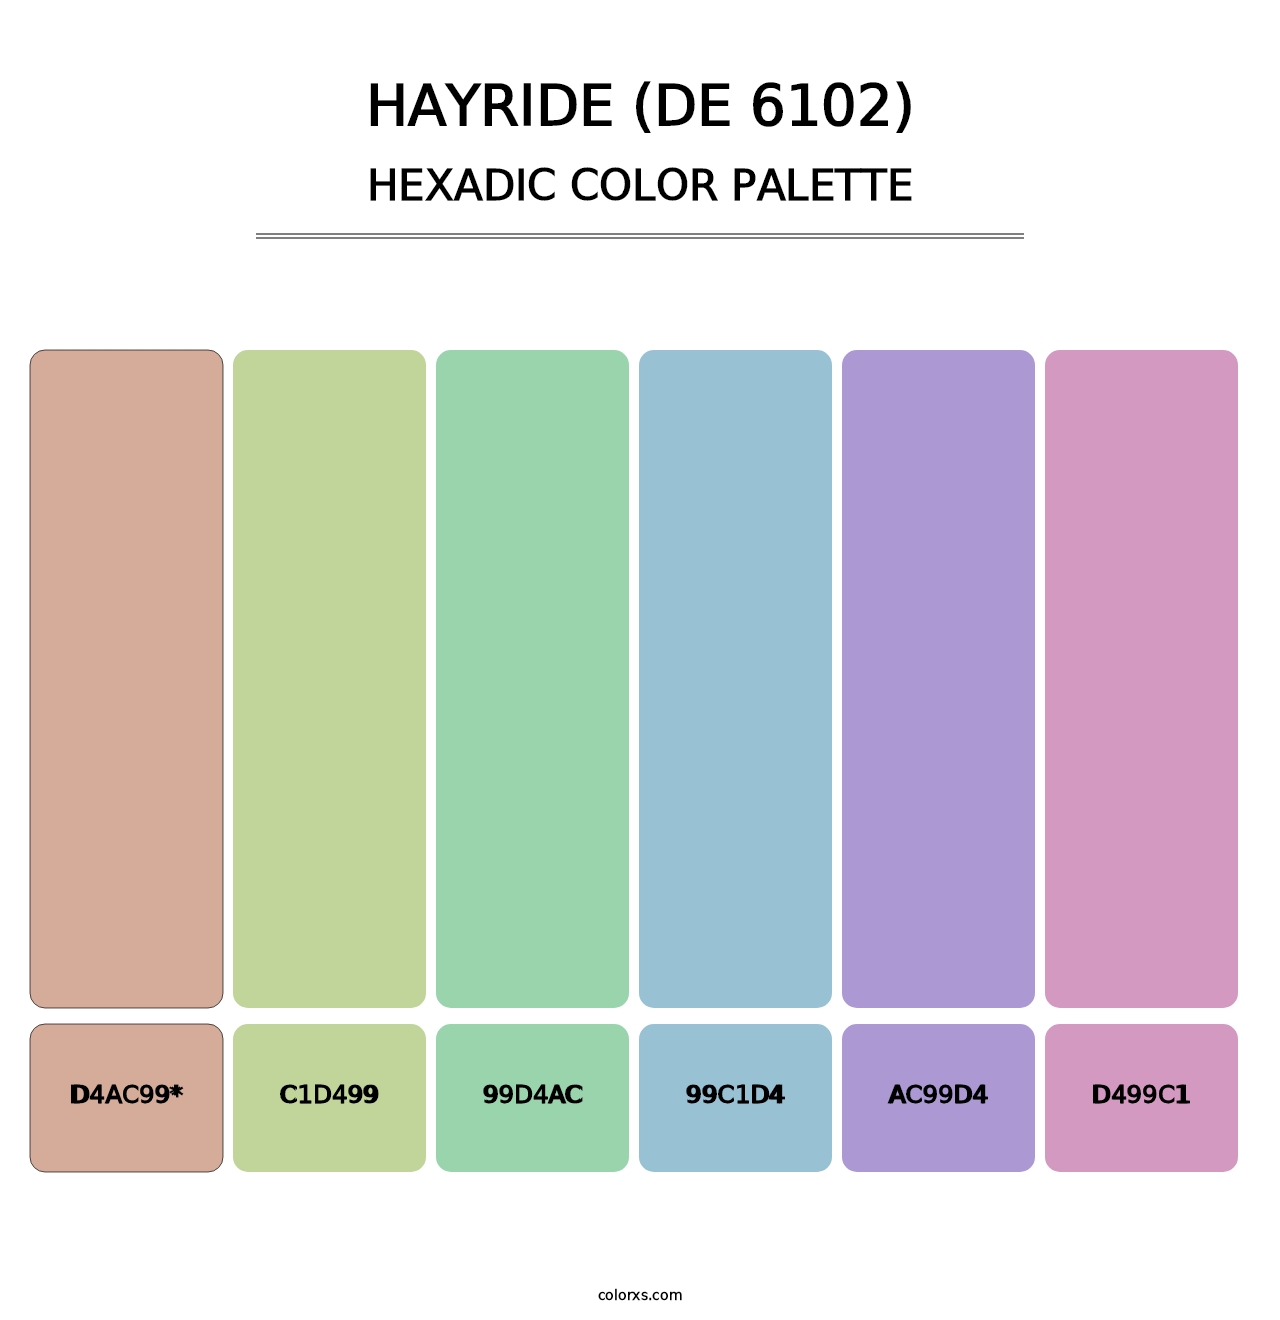 Hayride (DE 6102) - Hexadic Color Palette